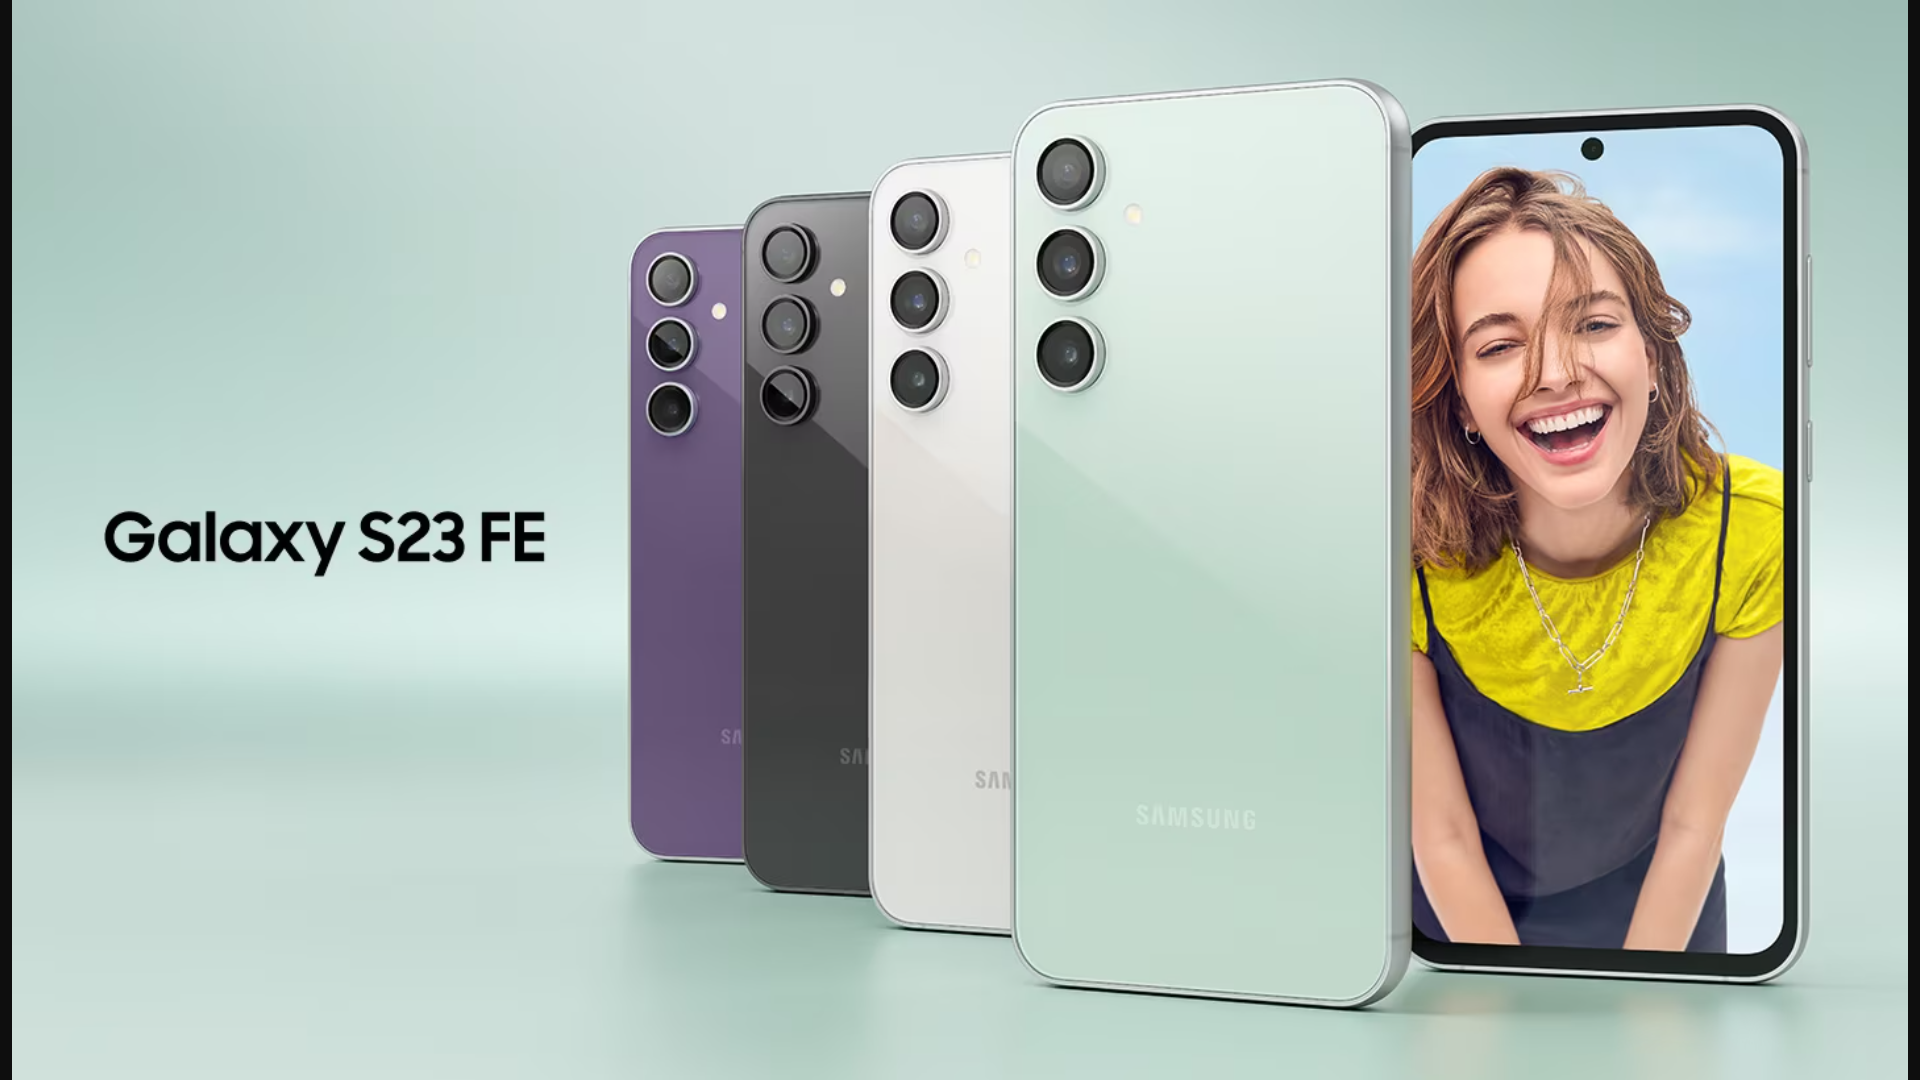 Samsung Galaxy S23 FE, Smartphone Berkelas dengan Spesifikasi Gahar dan Kamera yang Menawan